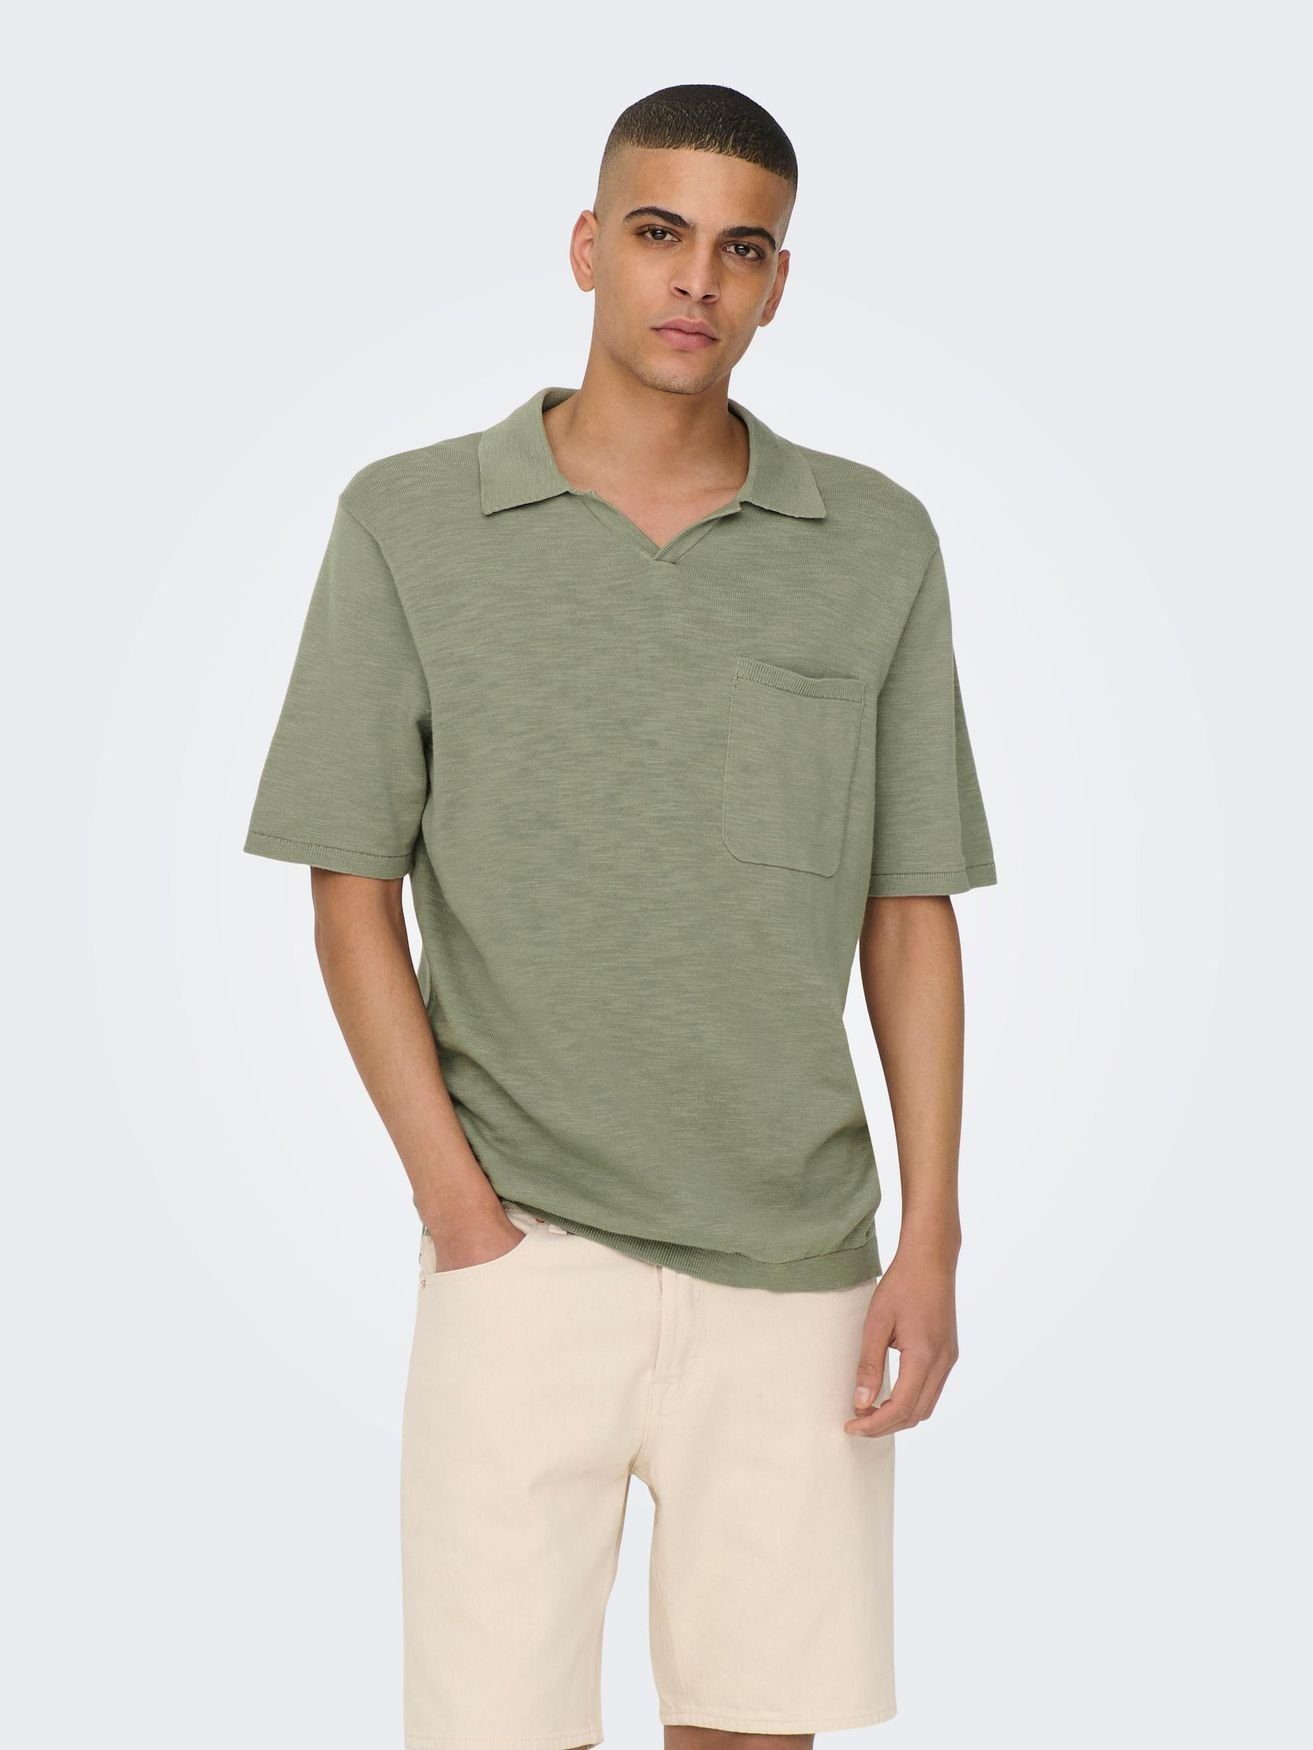 ONLY & SONS Poloshirt Einfarbiges Polo Hemd aus Baumwolle Kurzarm Shirt ONSACE 5025 in Grün | Poloshirts